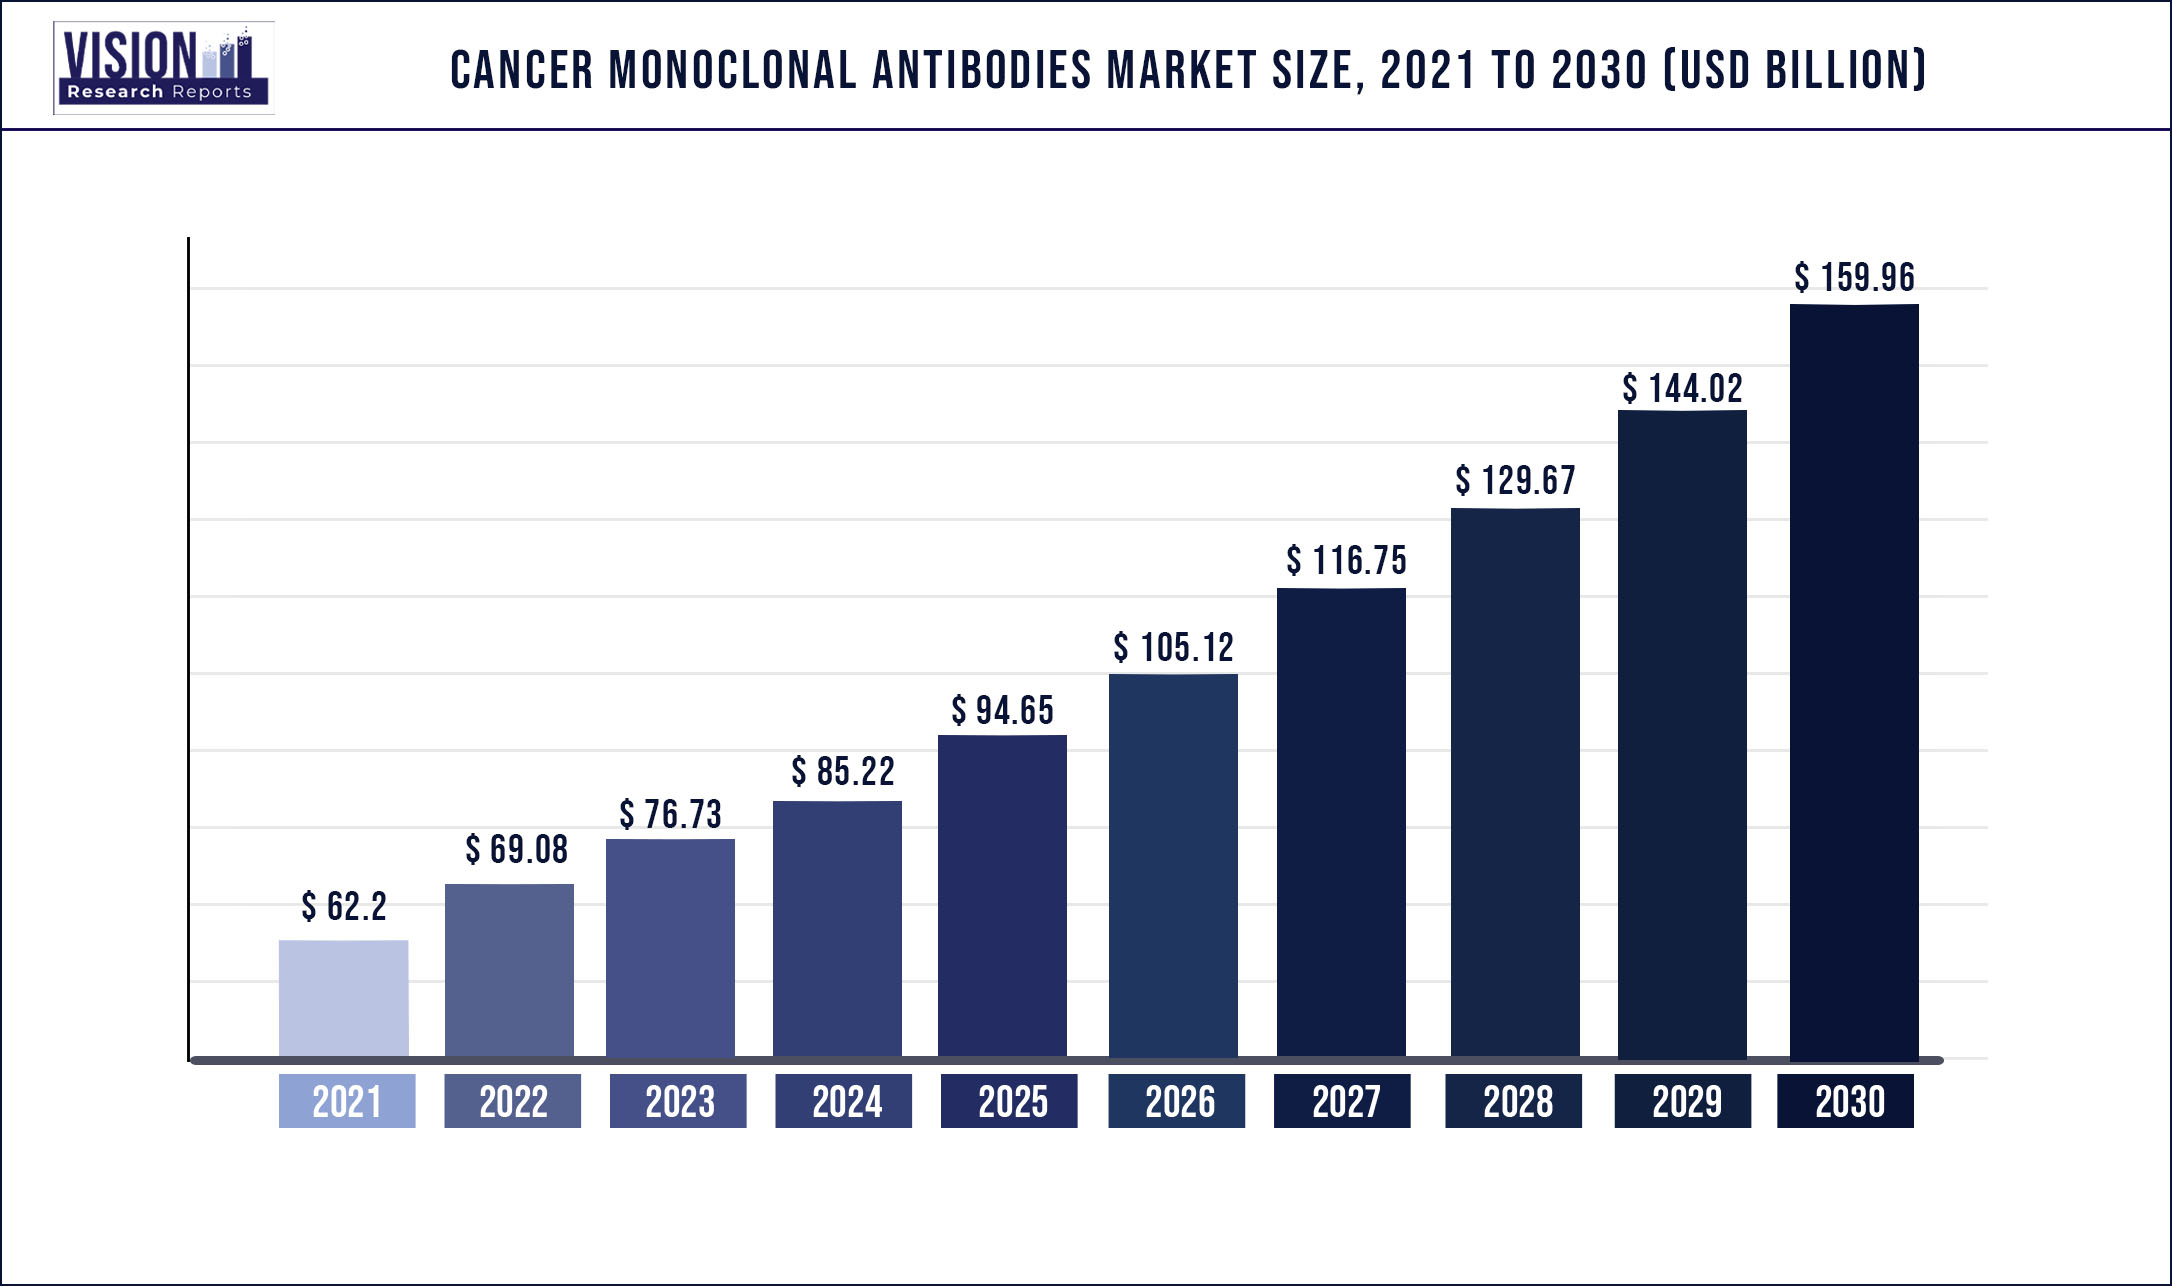 Cancer Monoclonal Antibodies Market Size 2021 to 2030